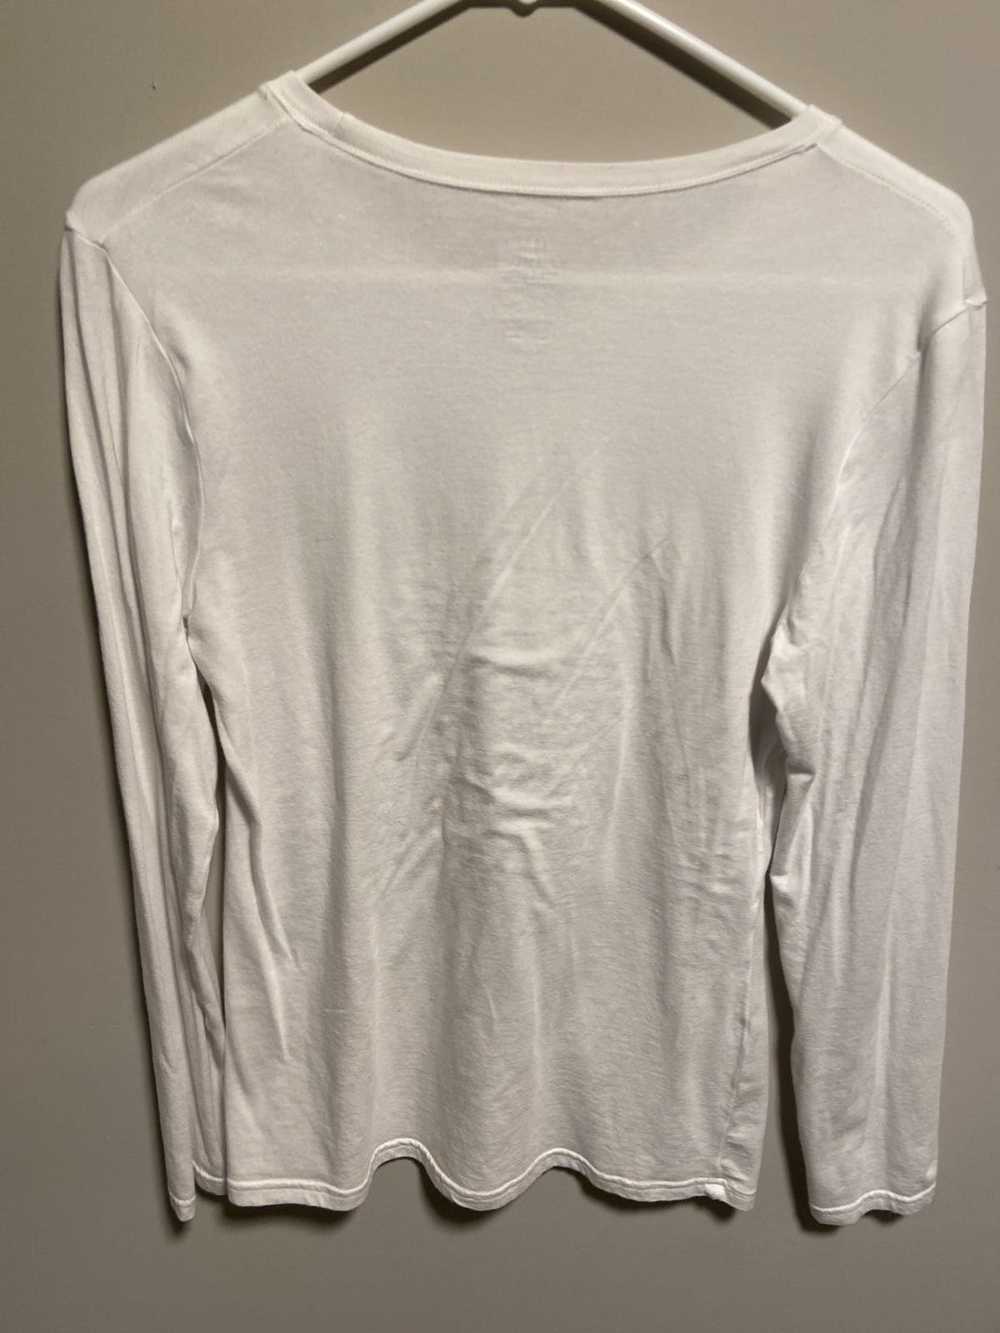 Japanese Brand White mesh shirt - image 2